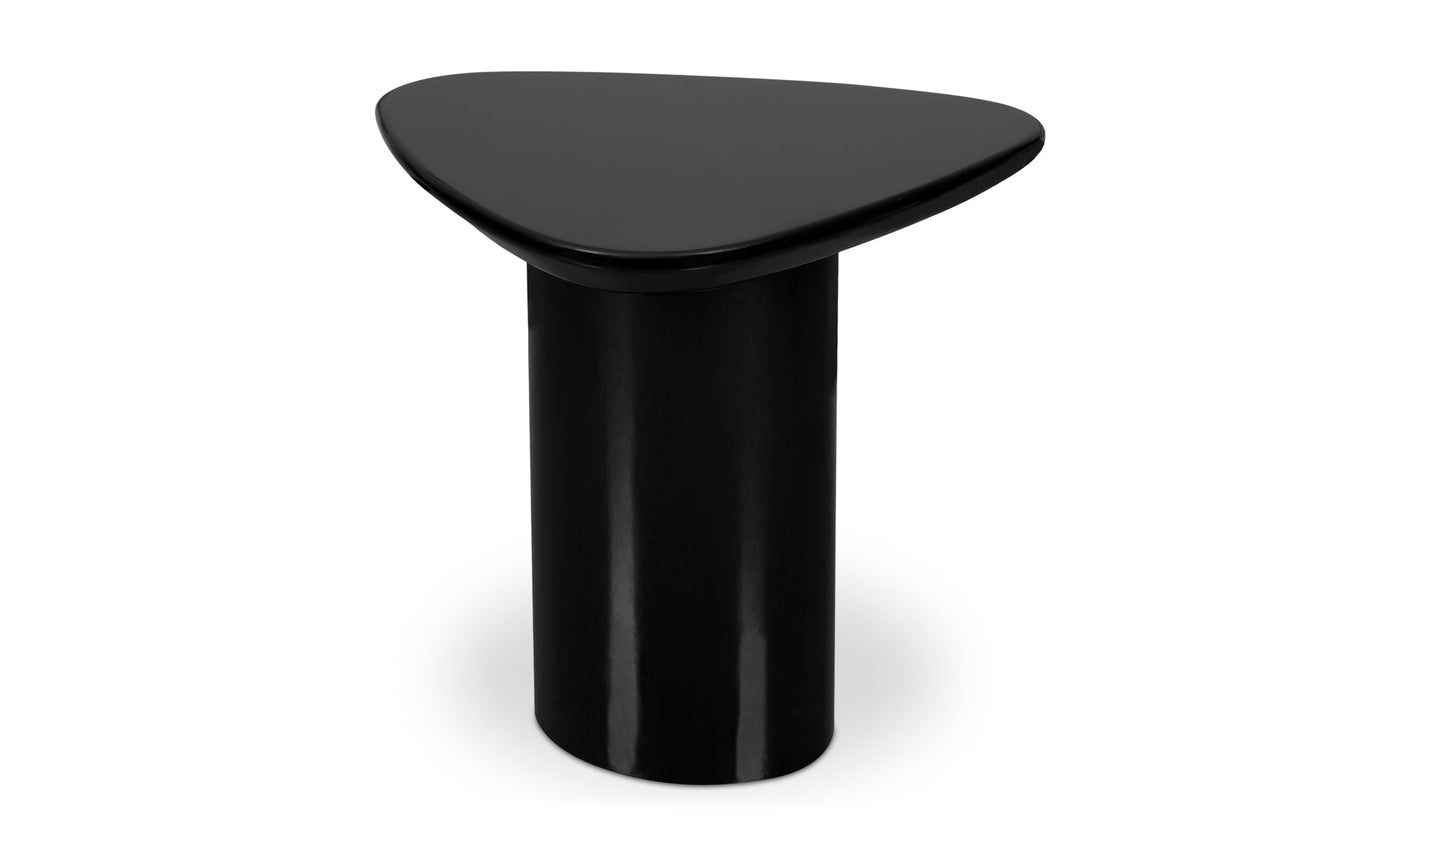 Moe's Furniture BLACK LACQUER EDEN ACCENT TABLE